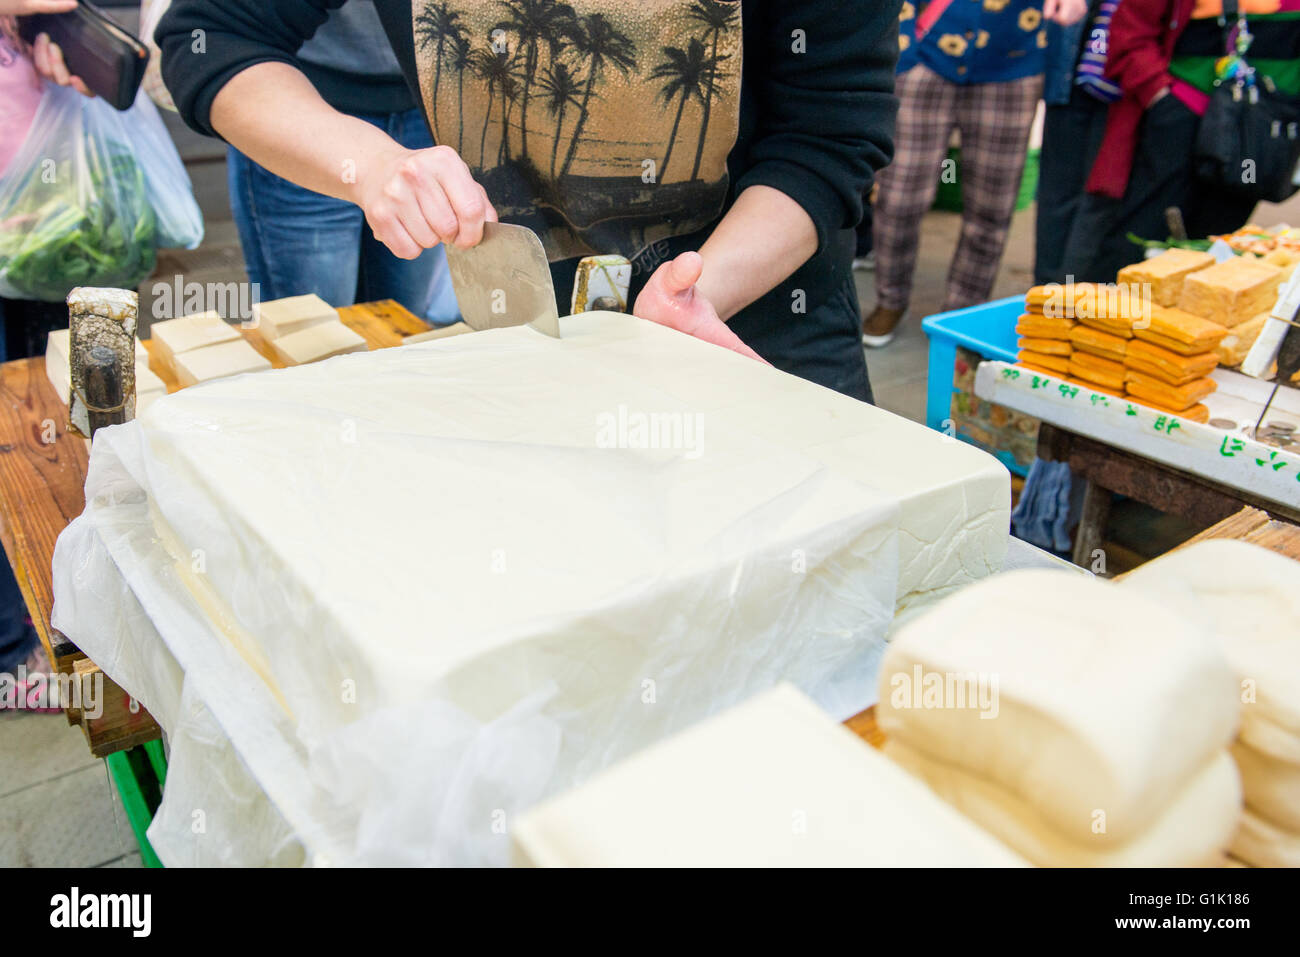 cutting large tofu block at market in Asia Stock Photo